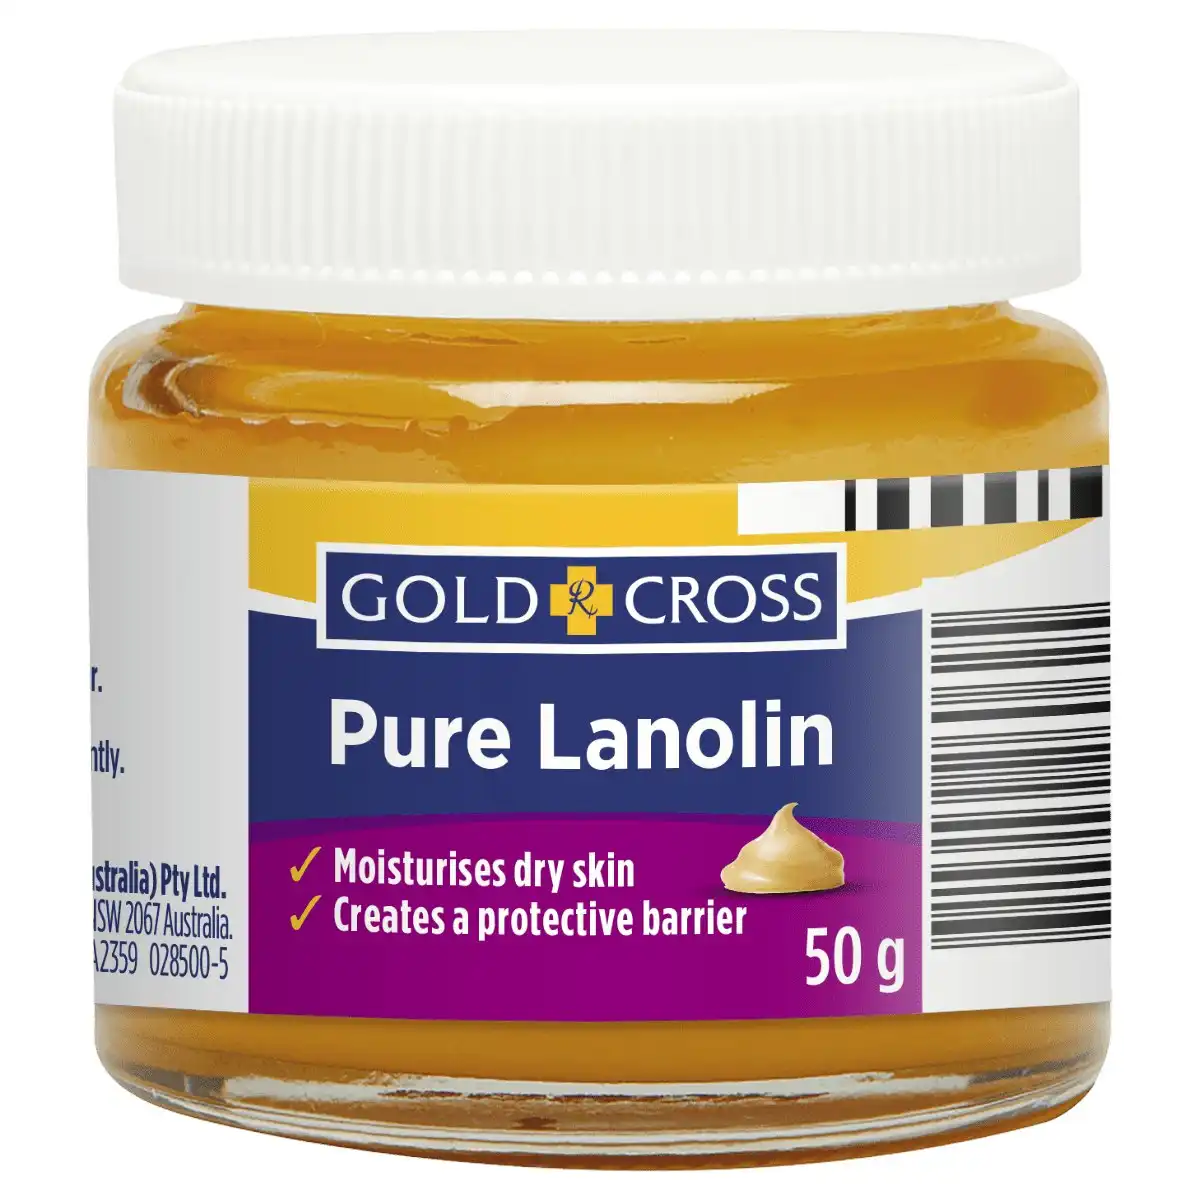 Gold Cross Pure Lanolin - 50g